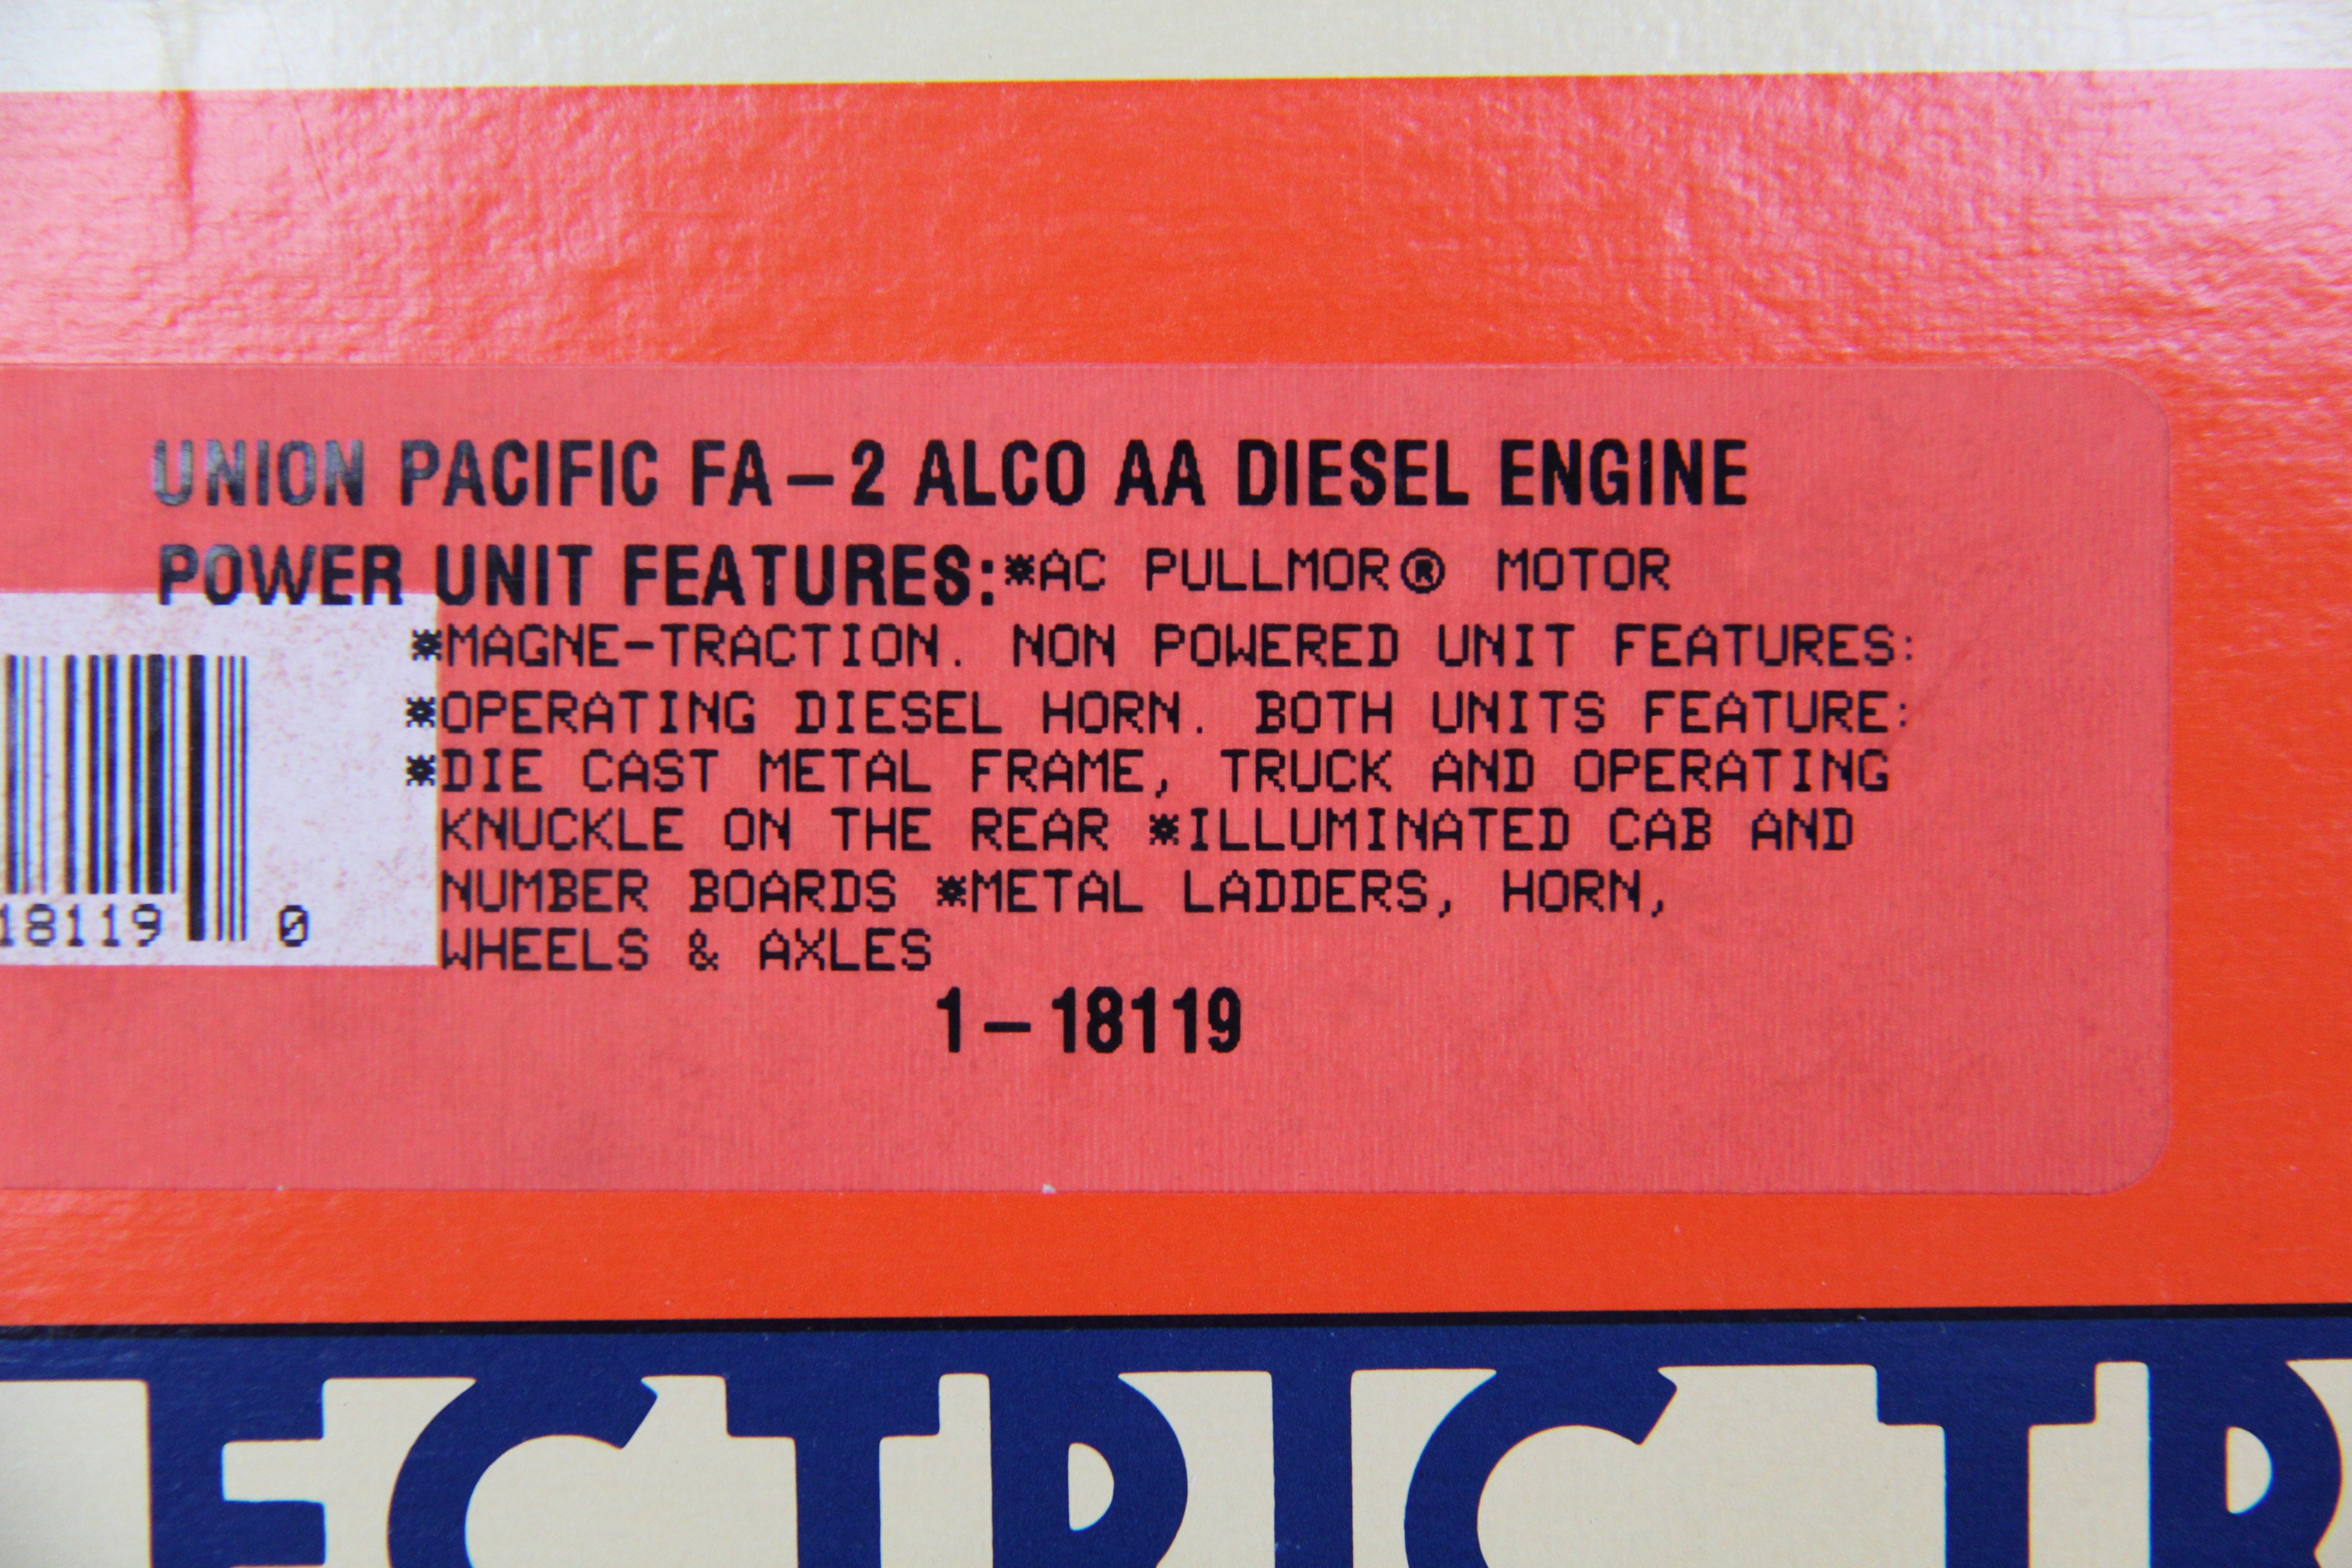 Lionel 6-18119 Union Pacific FA-2 Alco AA Diesel Engine Power Unit-Second hand-M4457